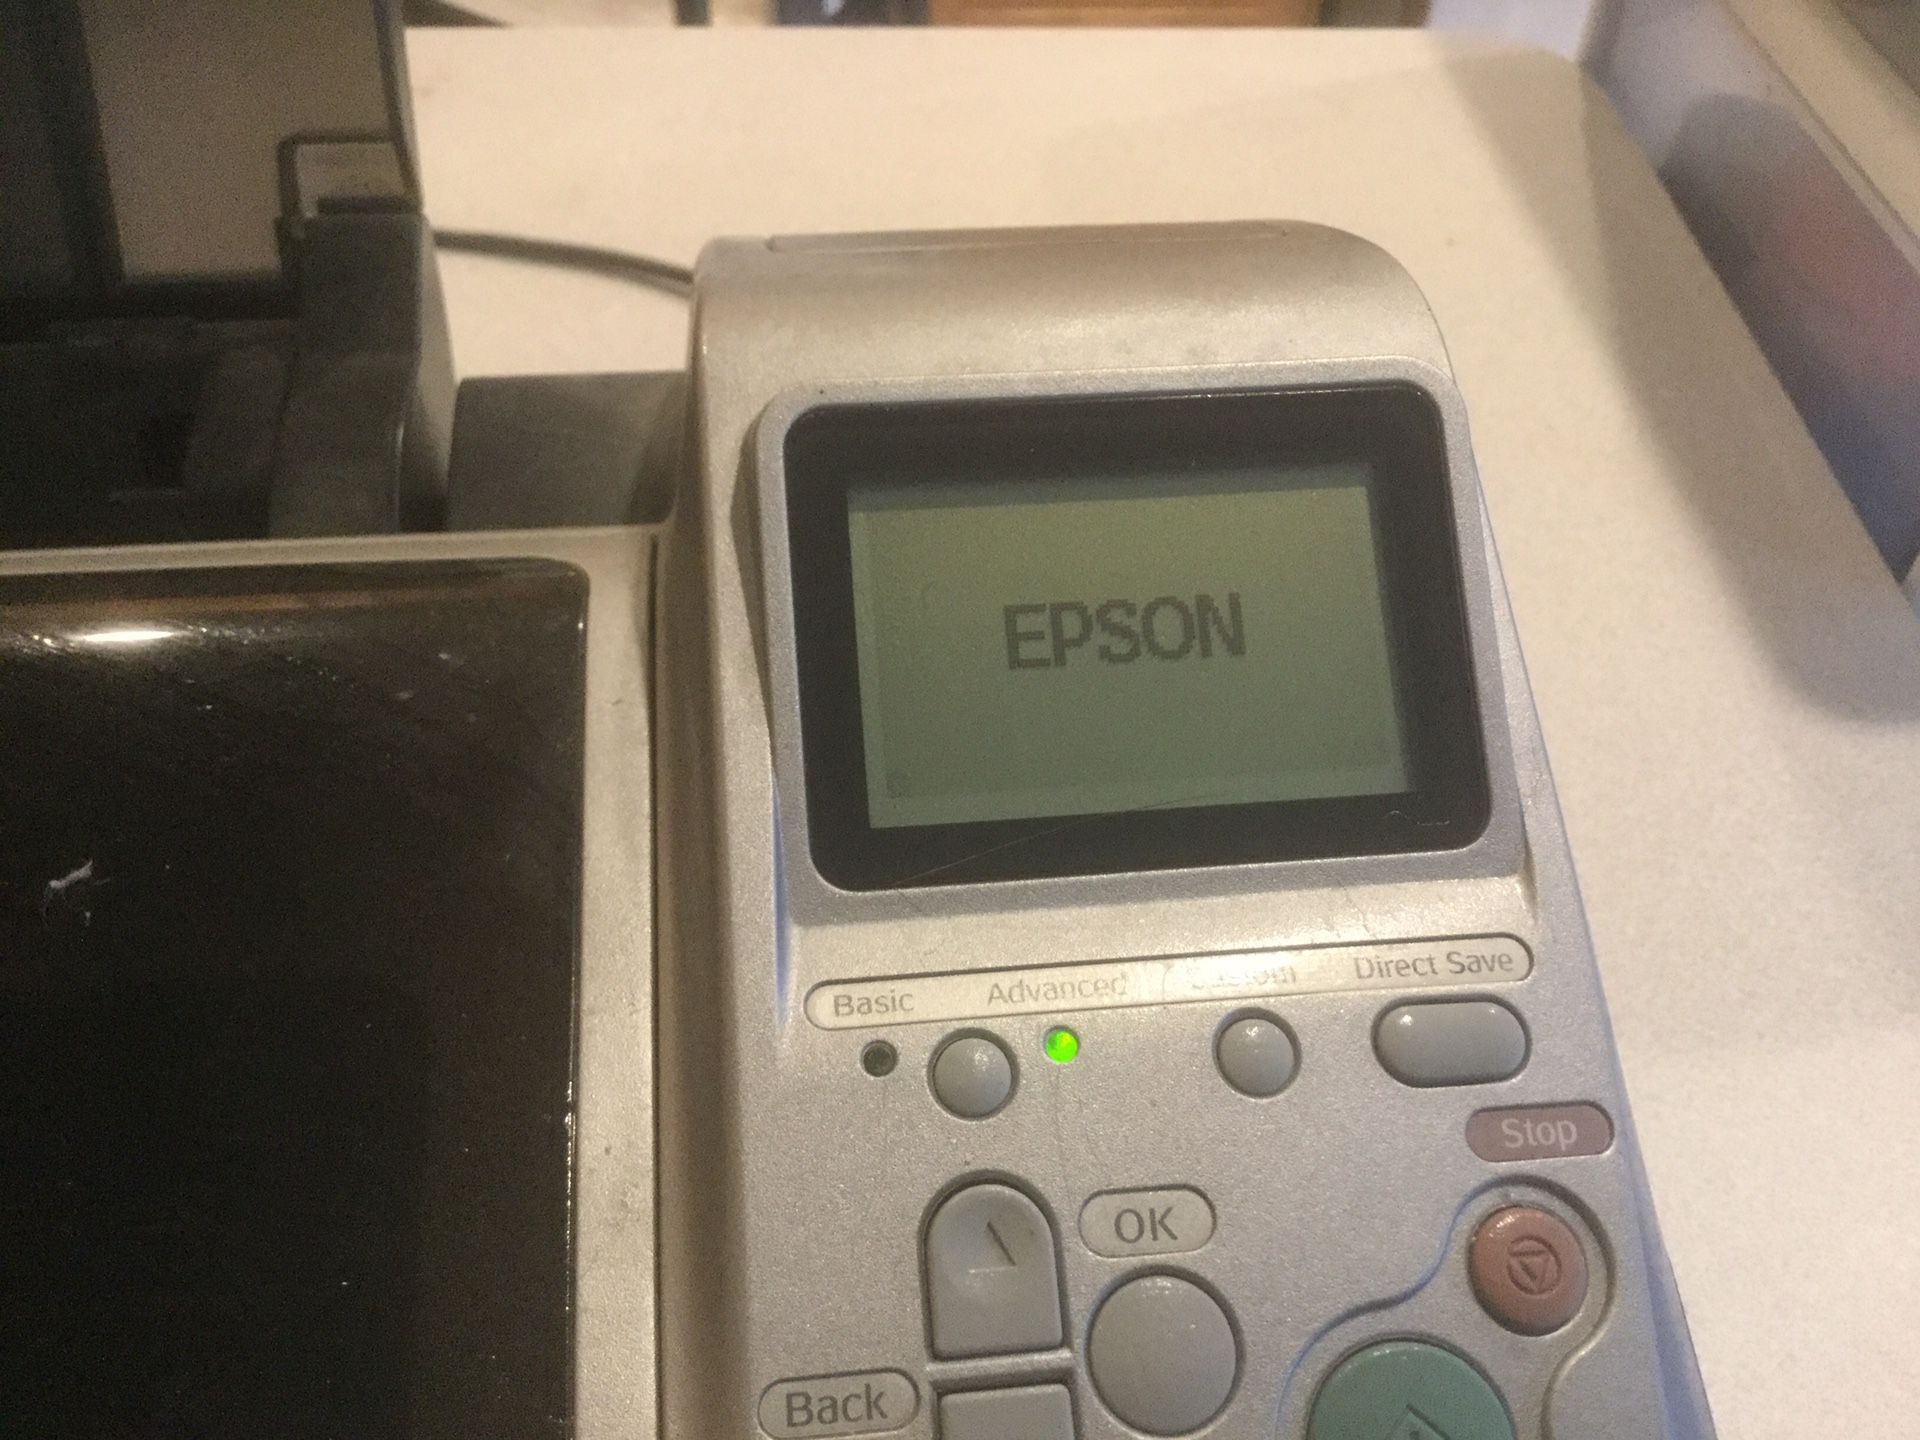 Epson printer and cartridges